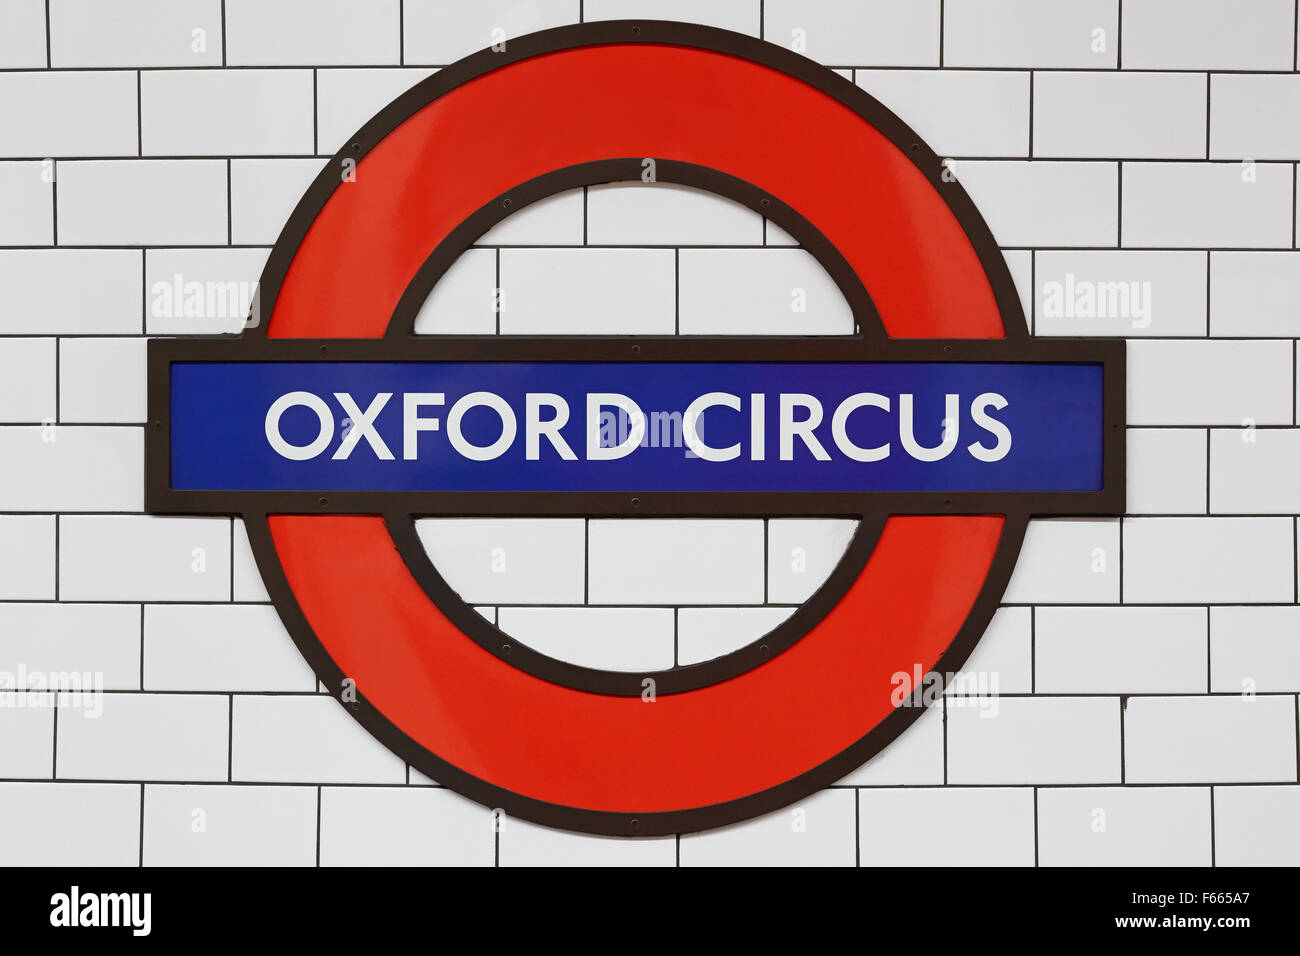 Oxford circus station sign, London Underground Stock Photo